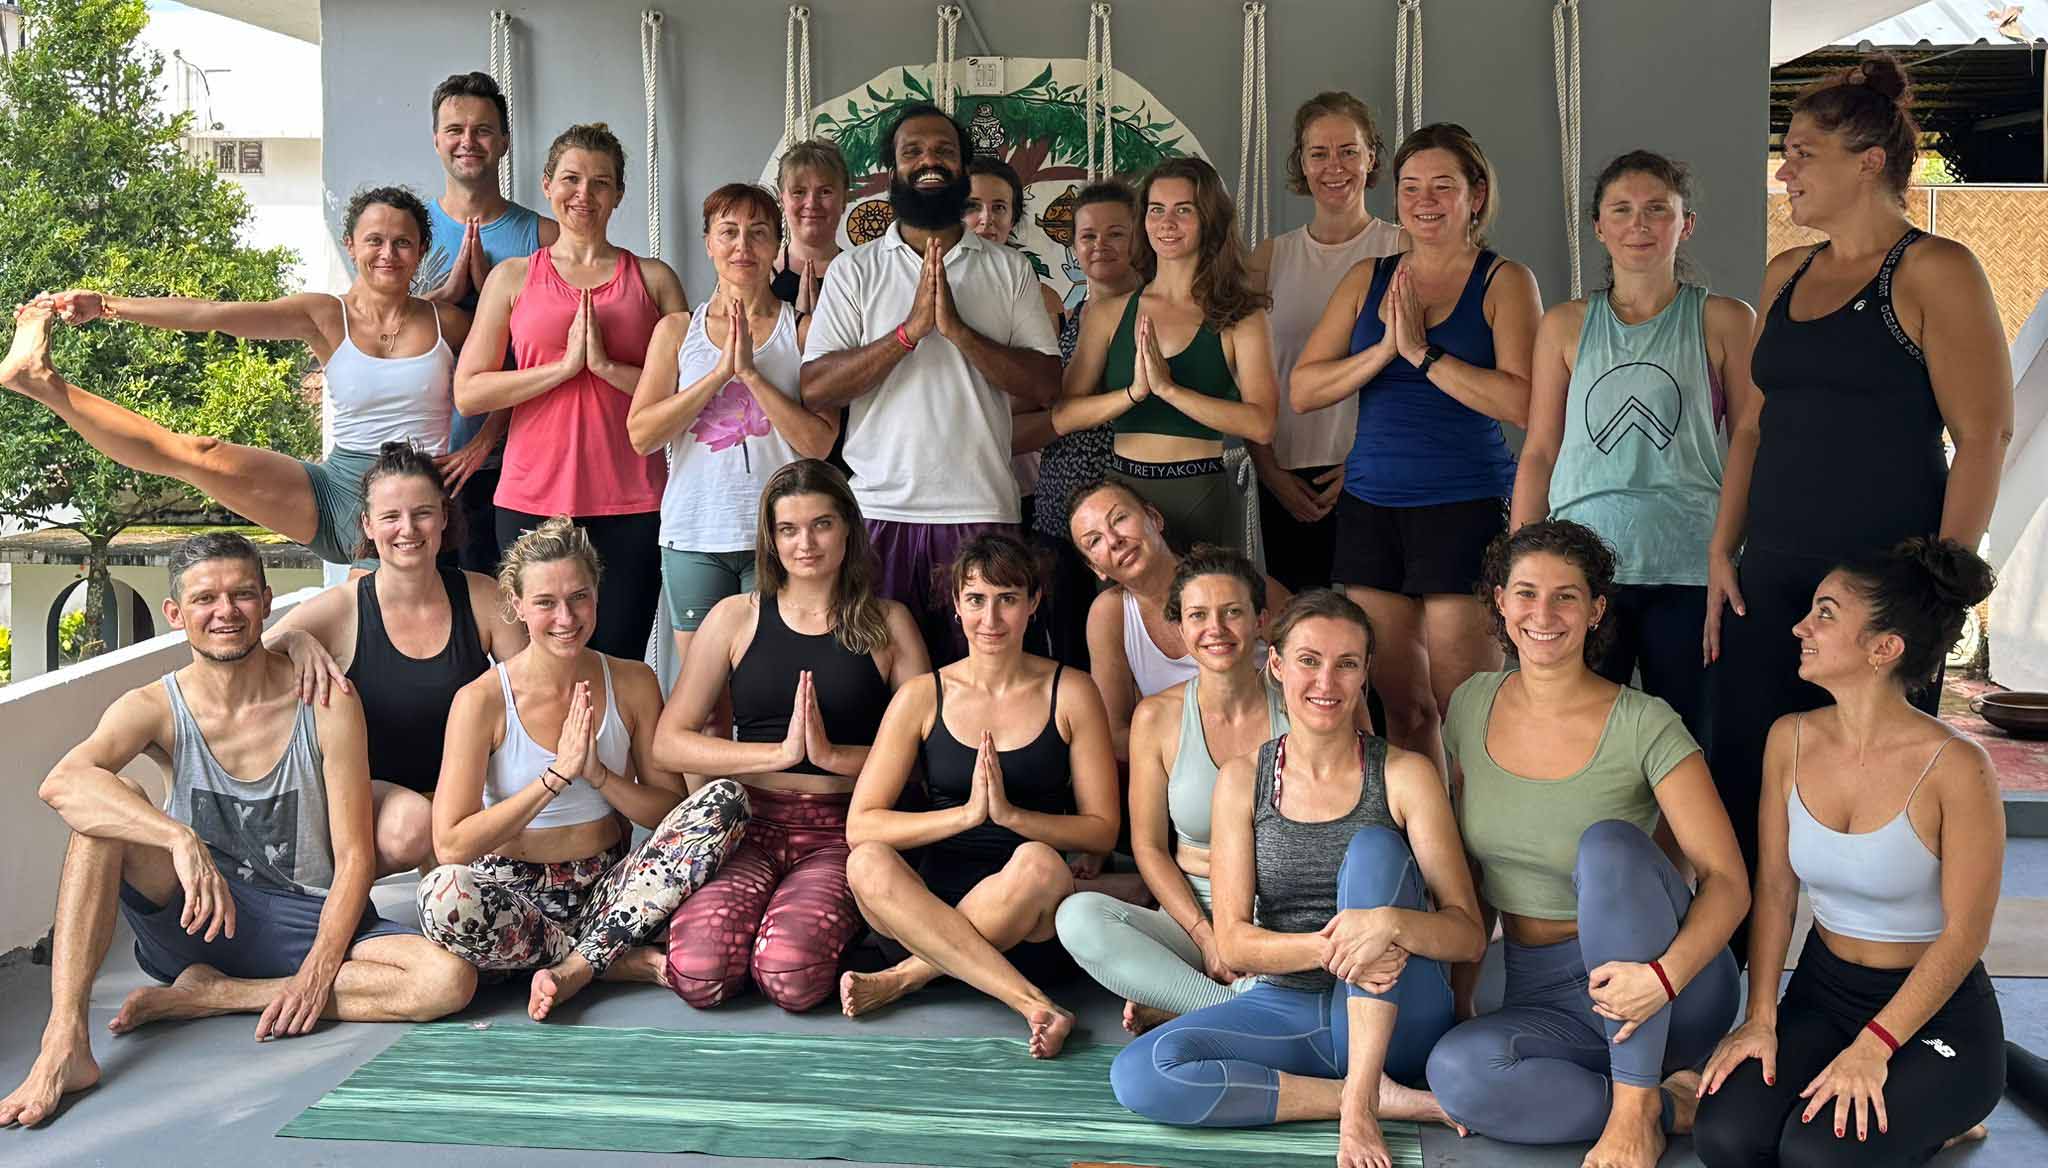 Do yoga and spread peace and harmony